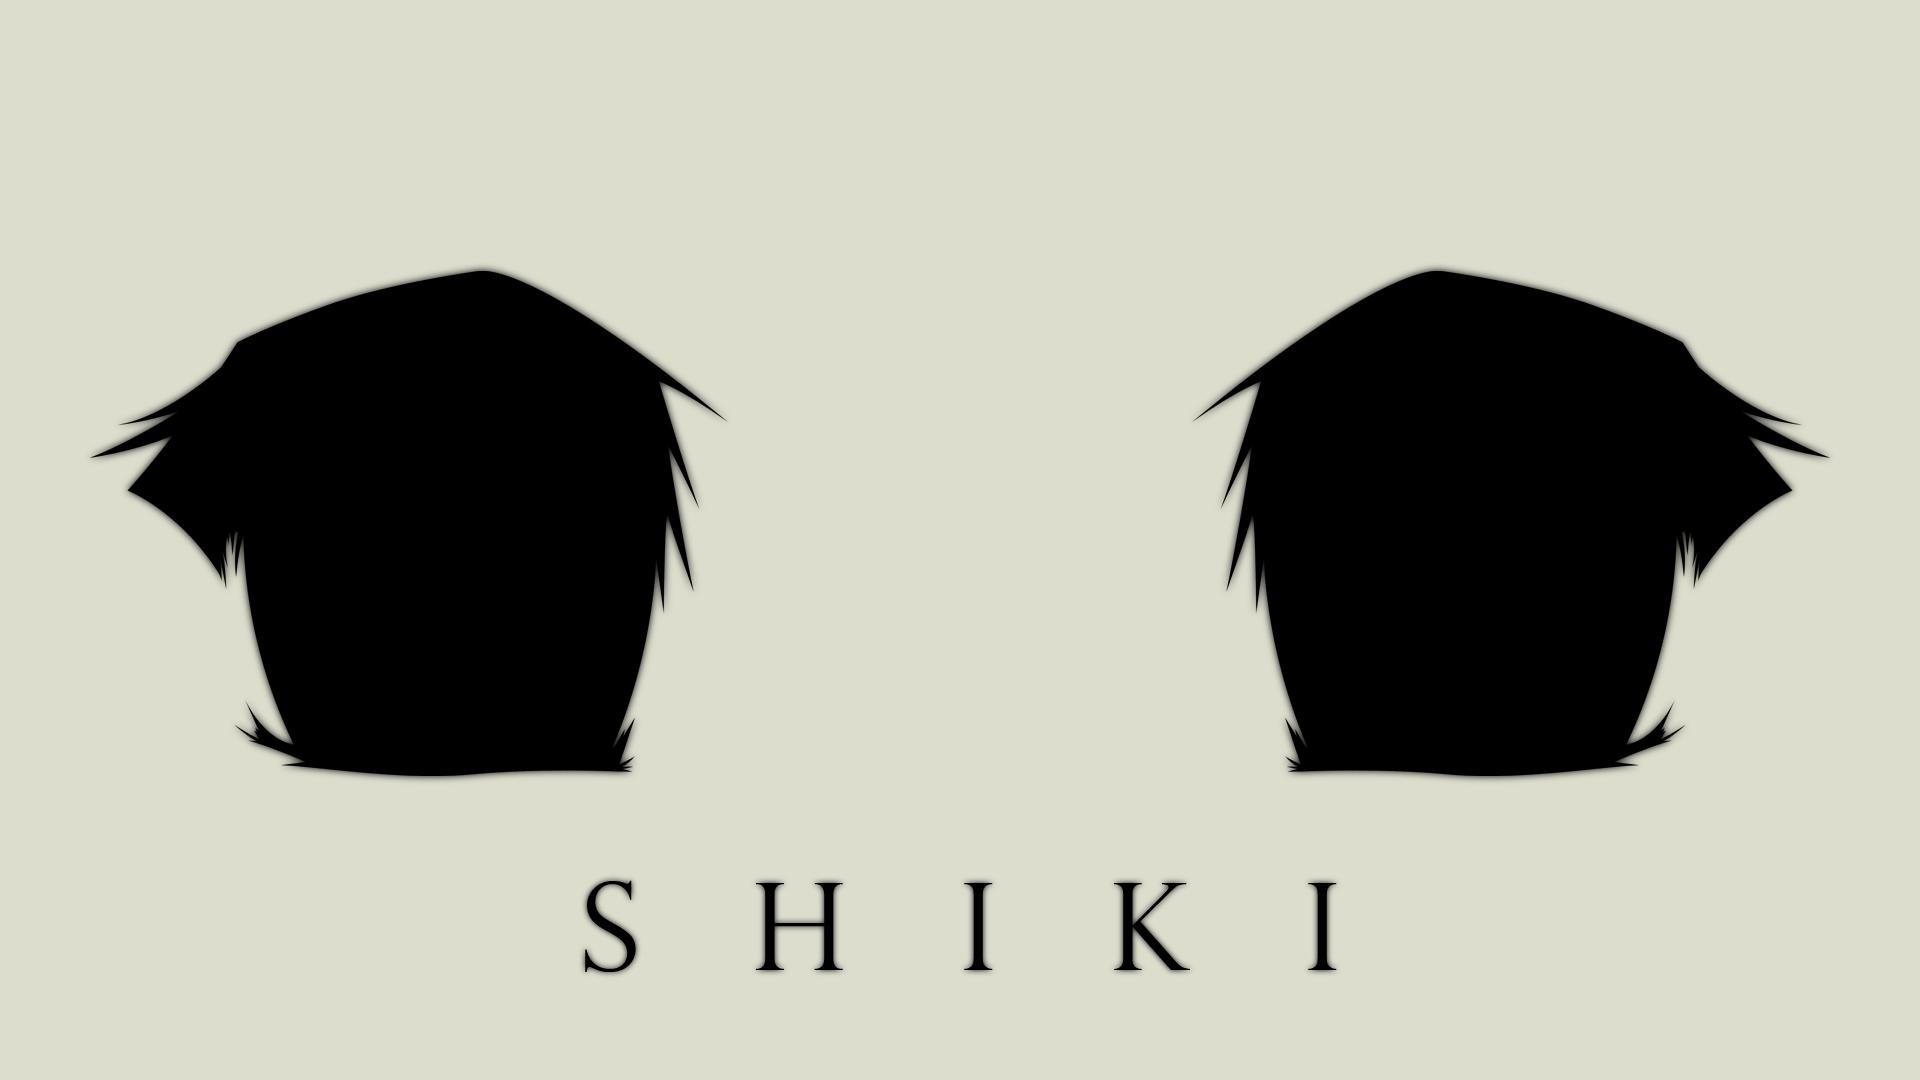 sunako kirishiki-shiki - Other & Anime Background Wallpapers on Desktop  Nexus (Image 2303541)